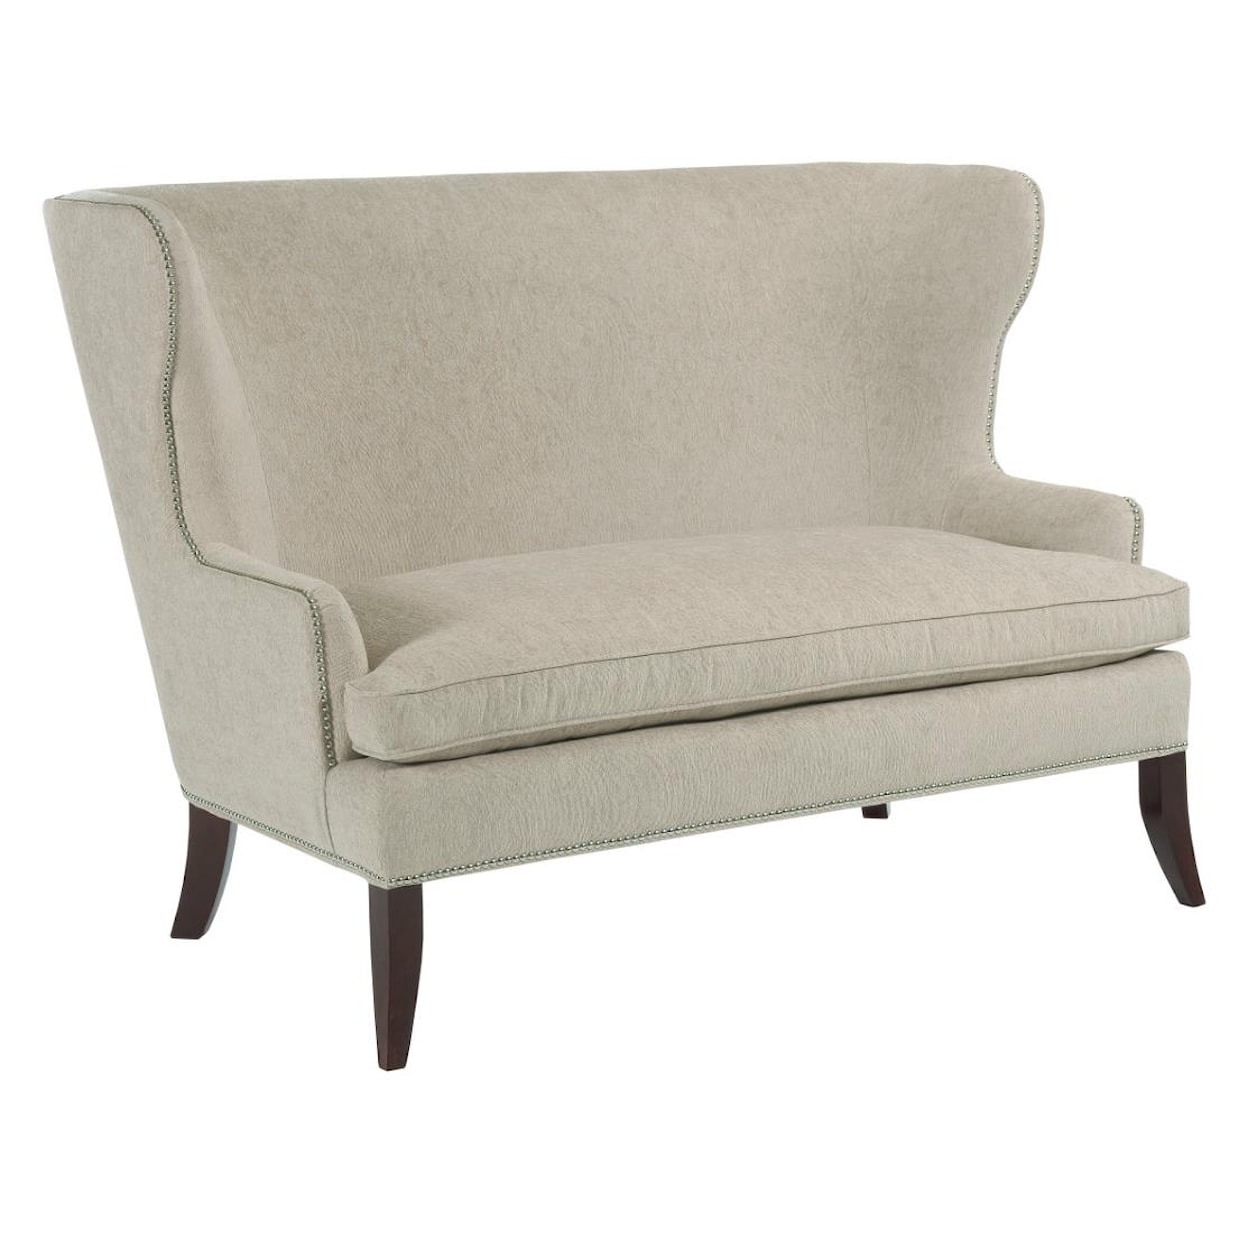 Kincaid Furniture Accent Chairs Denton Settee